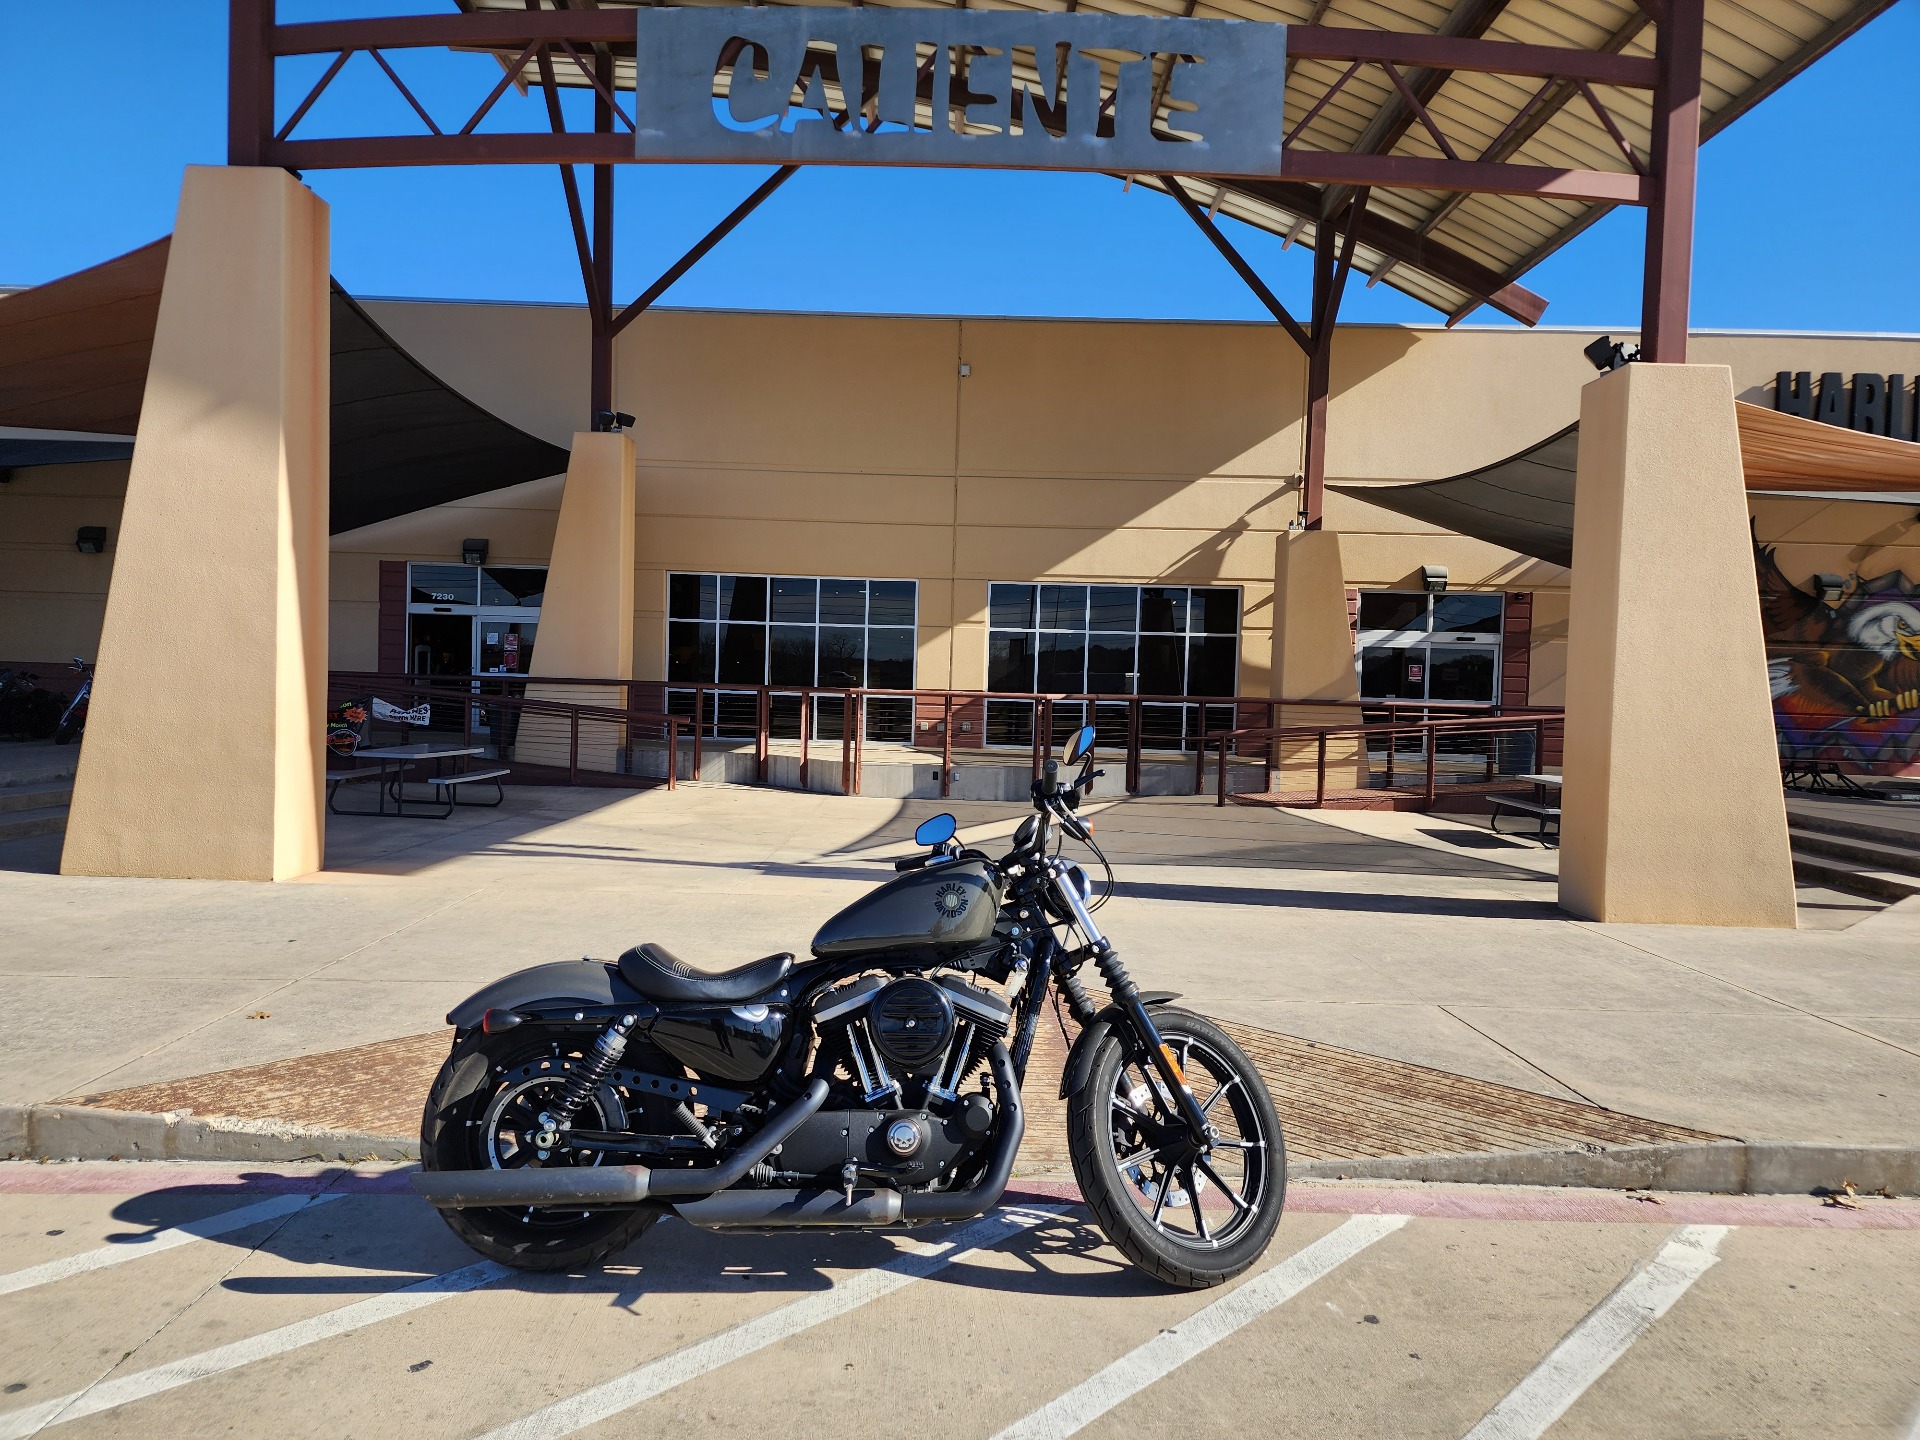 2019 Harley-Davidson Iron 883™ in San Antonio, Texas - Photo 1